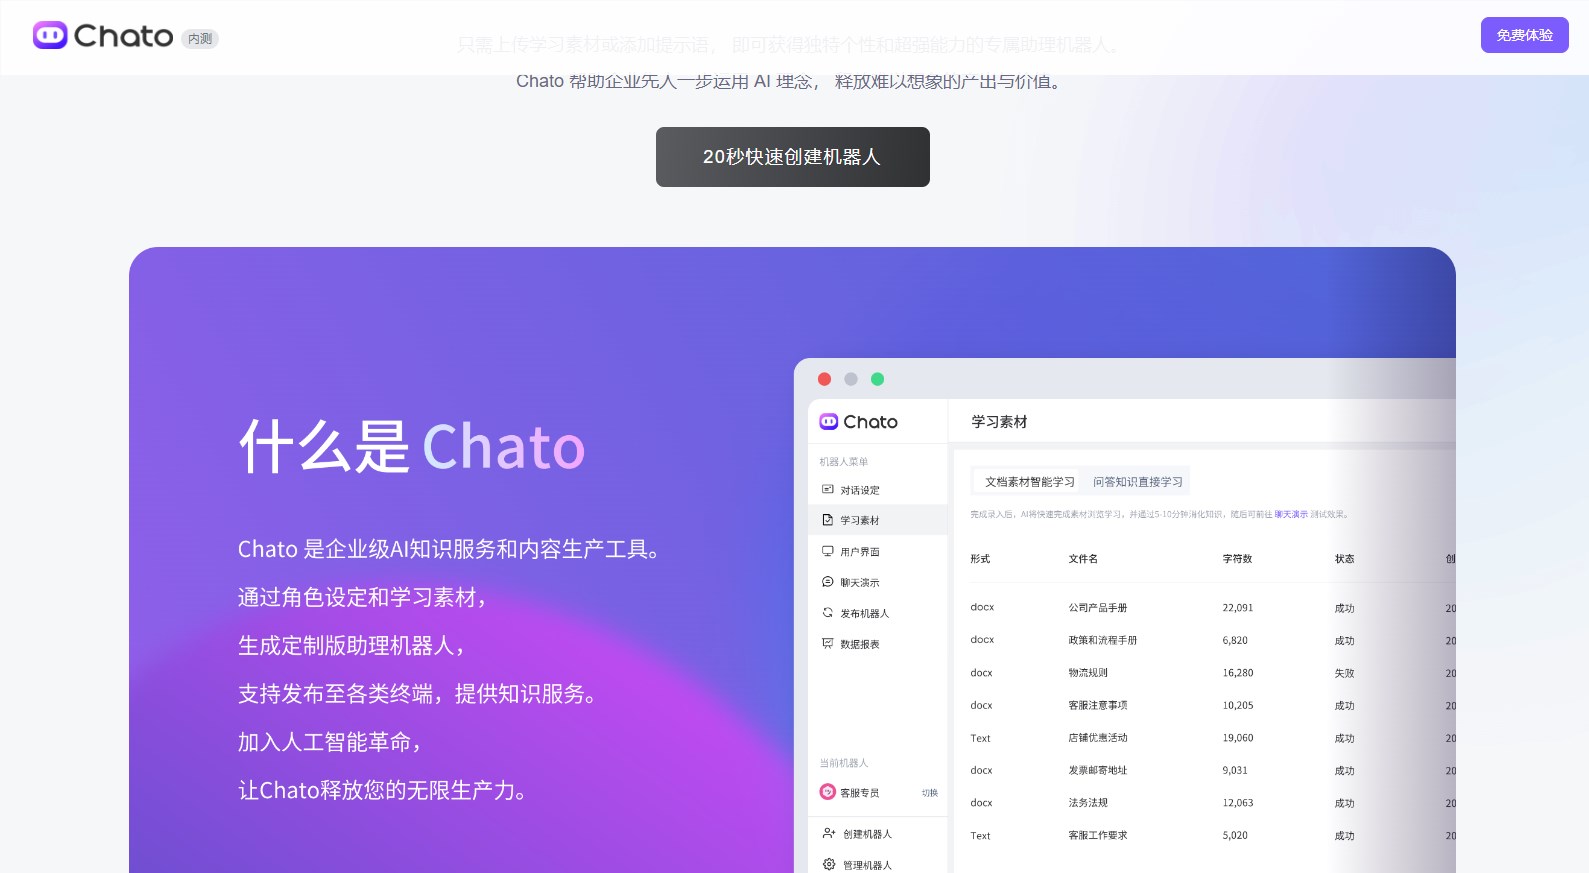 Chato：基于AI技术 轻松定制个性化助理机器人